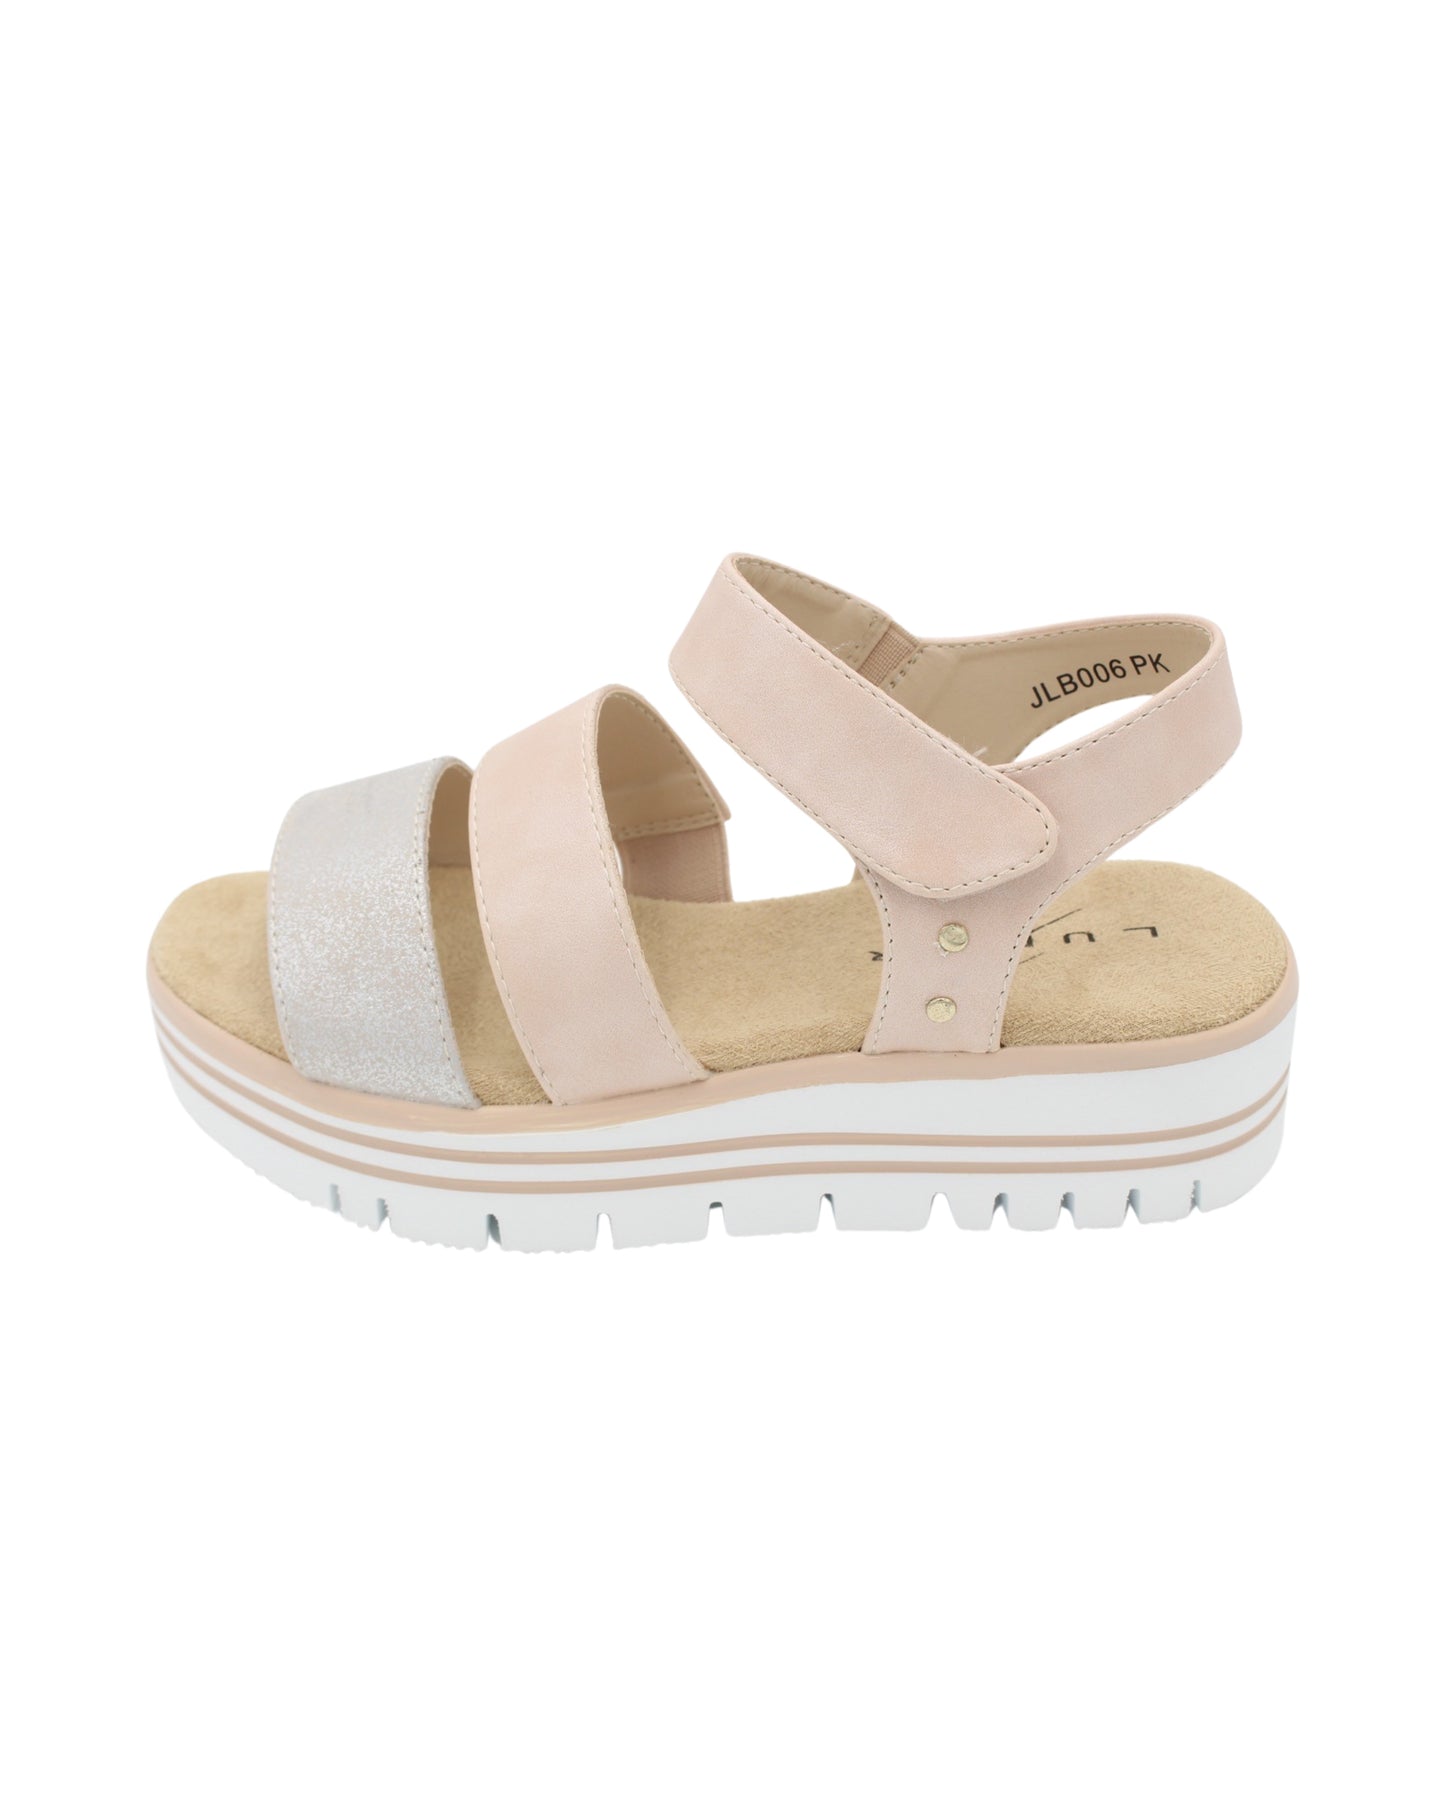 Lunar - Ladies Shoes Sandals Pink (2268)